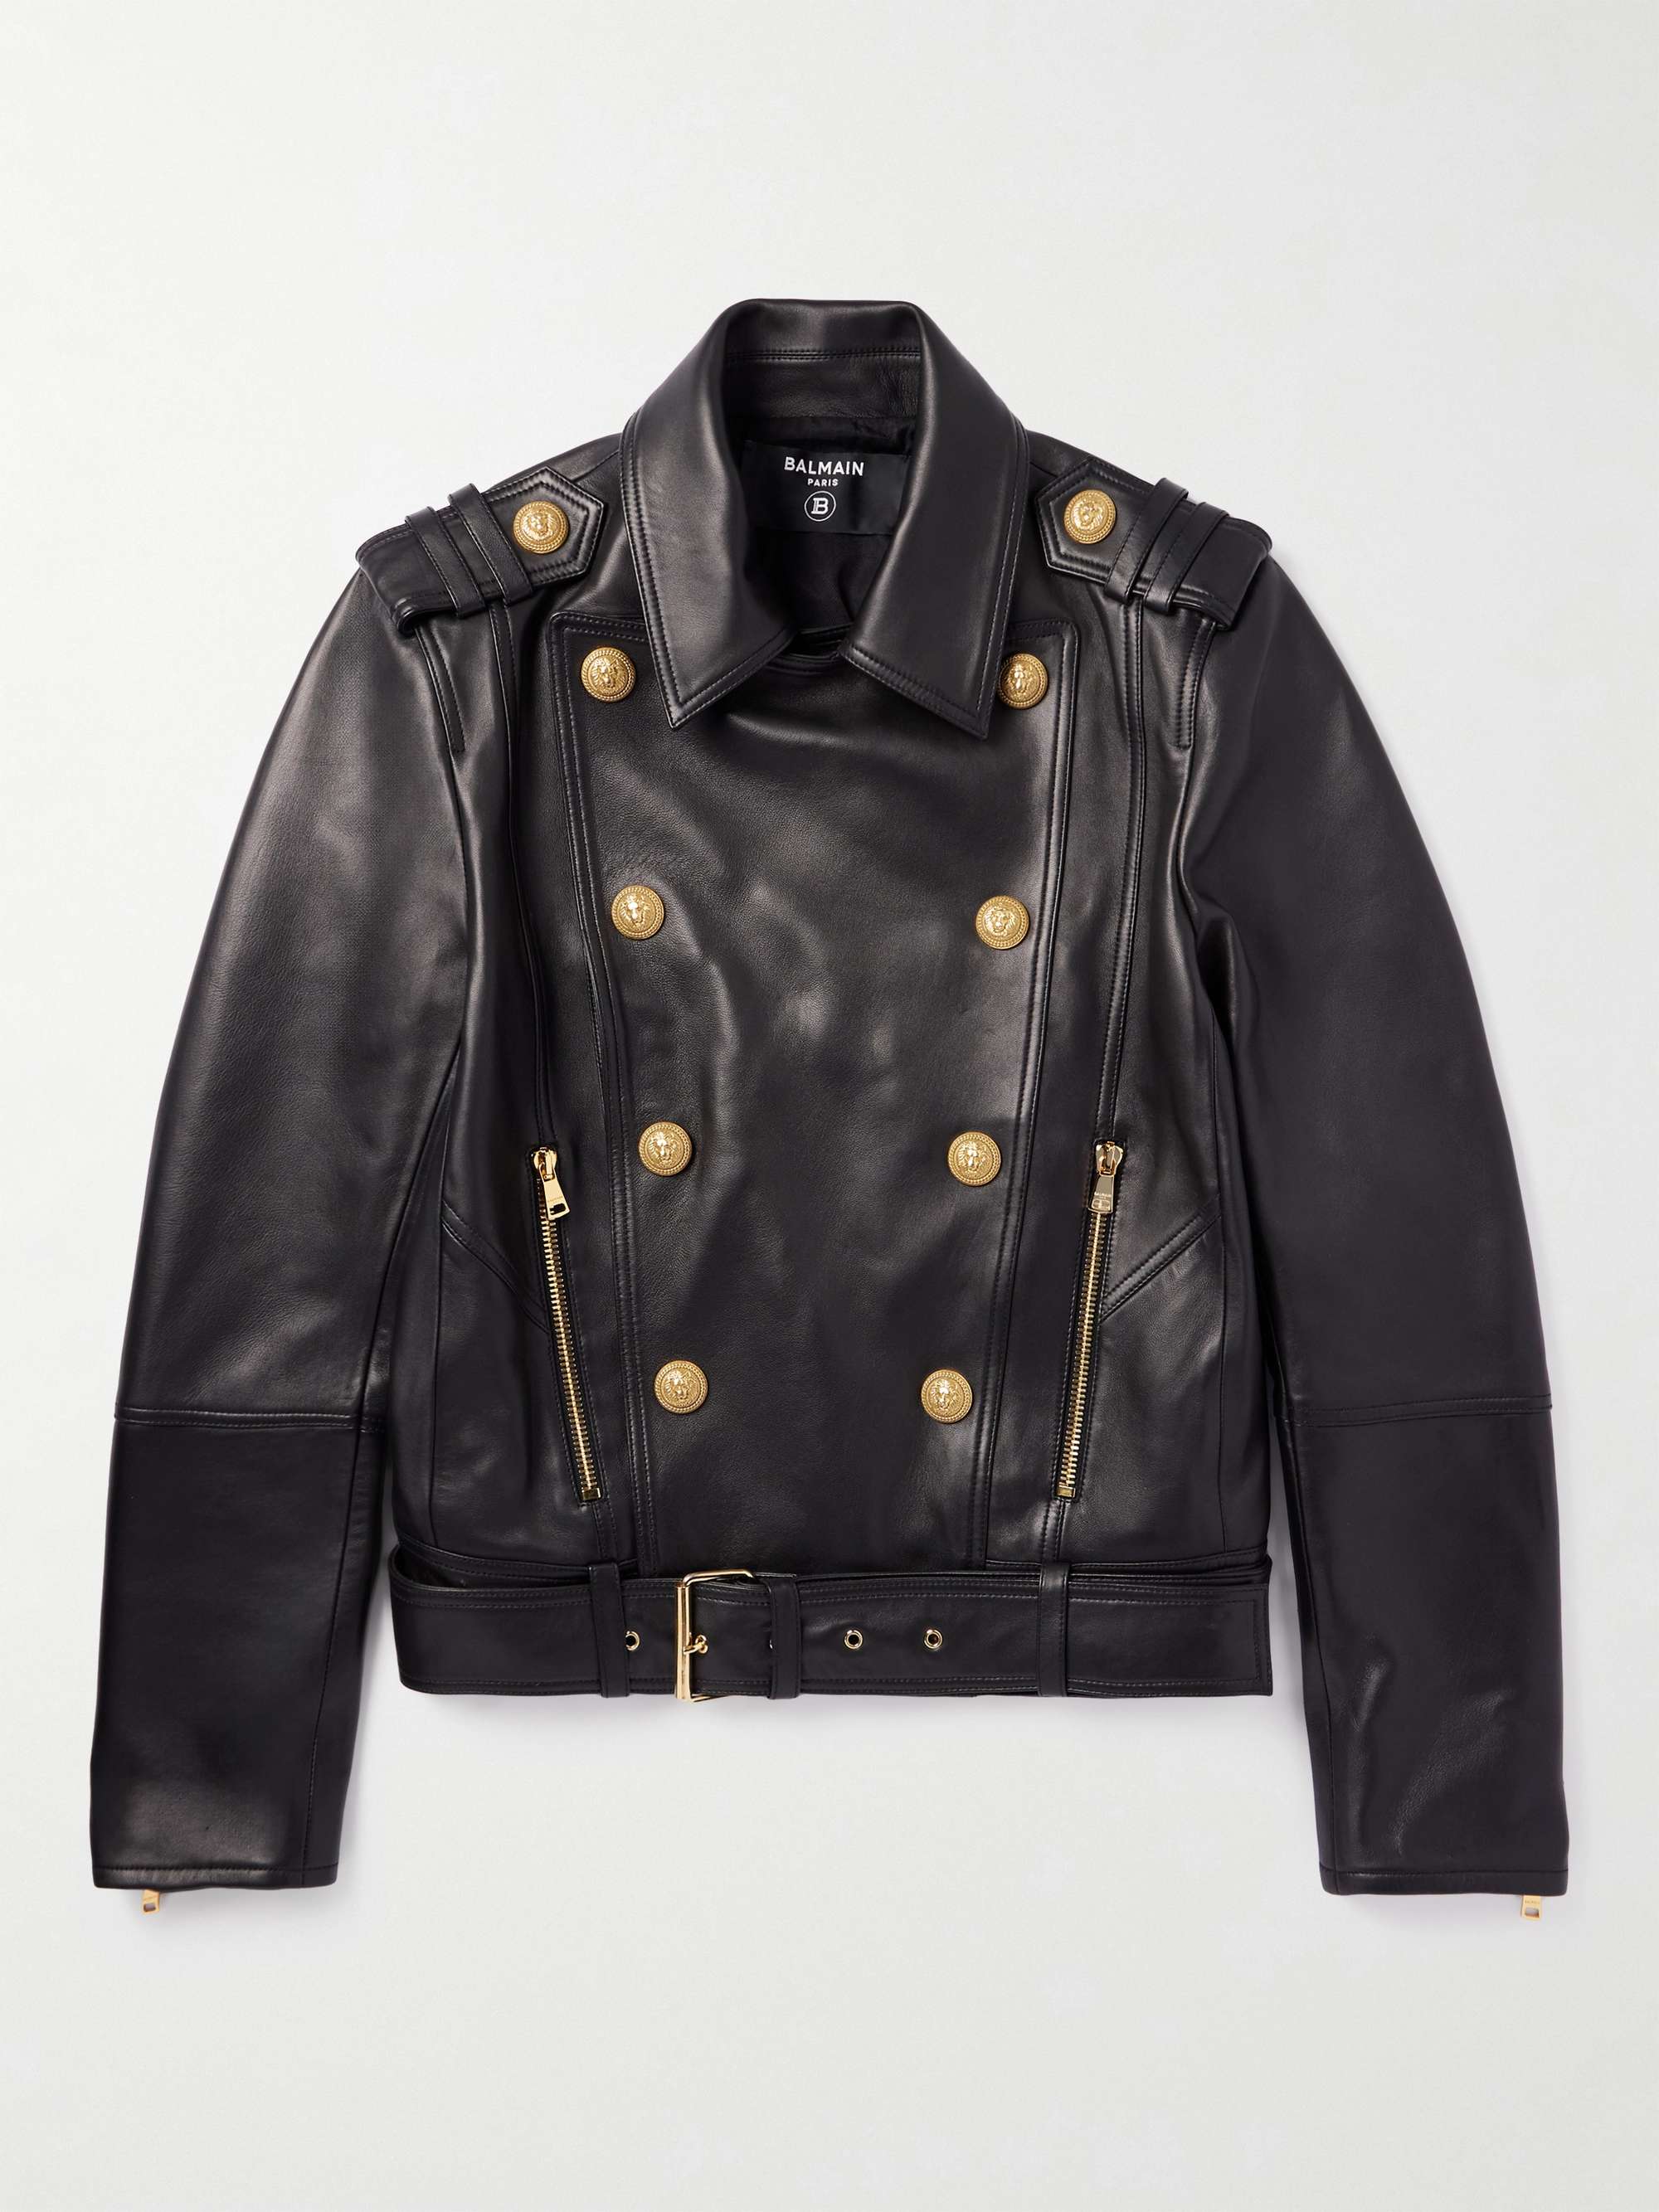 BALMAIN Double-Breasted Leather Biker Jacket for Men | MR PORTER